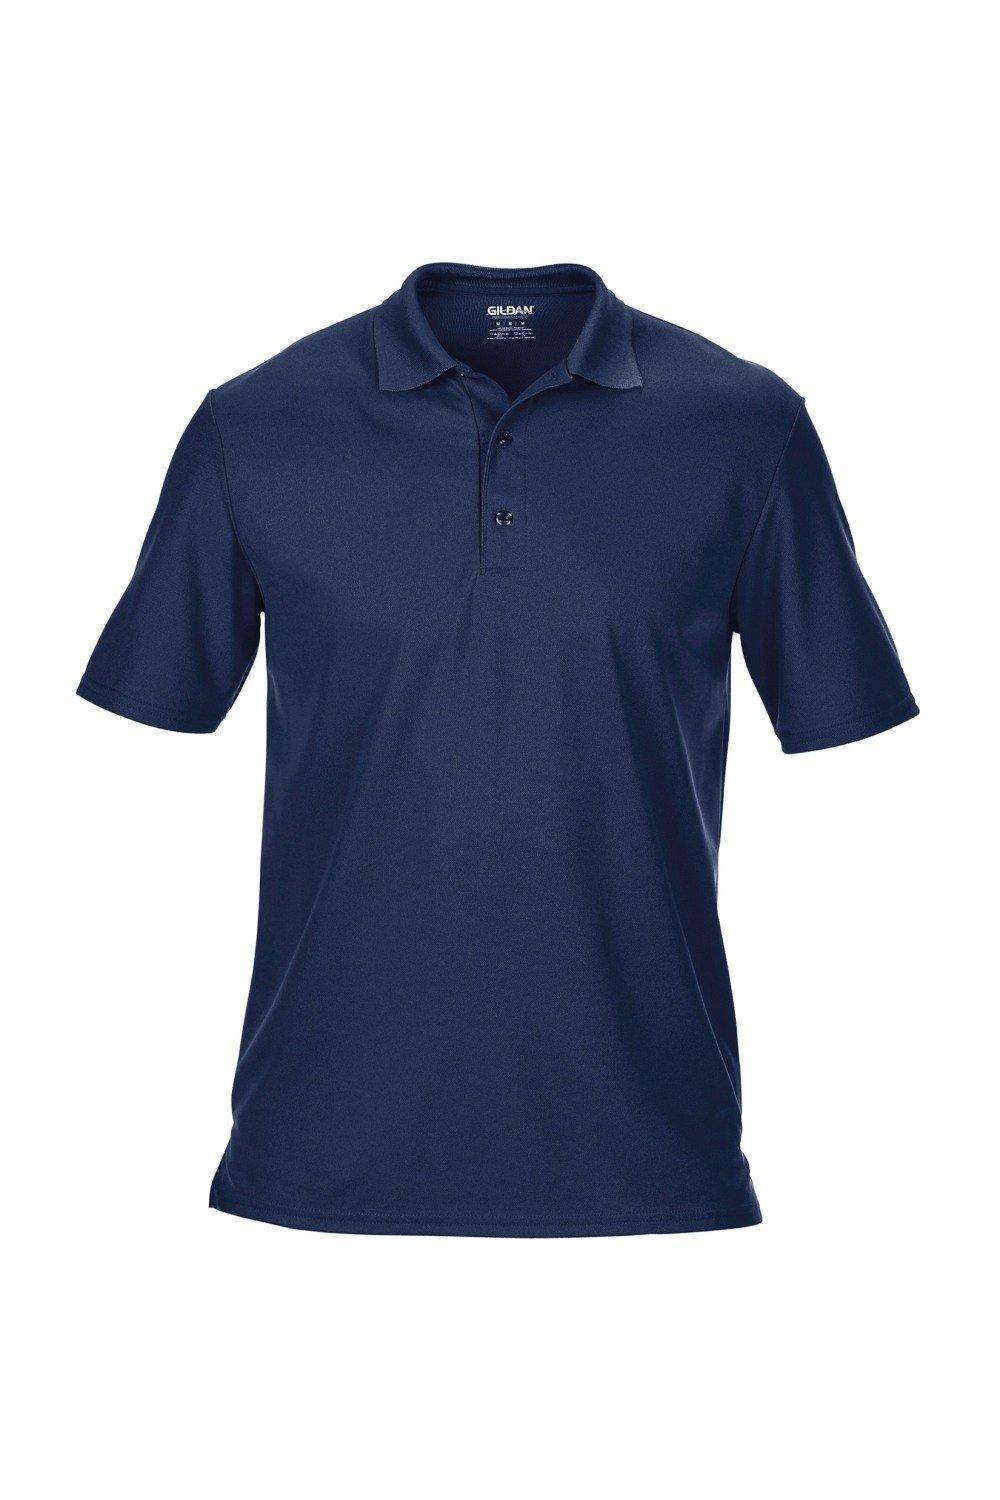 цена Рубашка поло Performance Sport из двойного пике Gildan, темно-синий